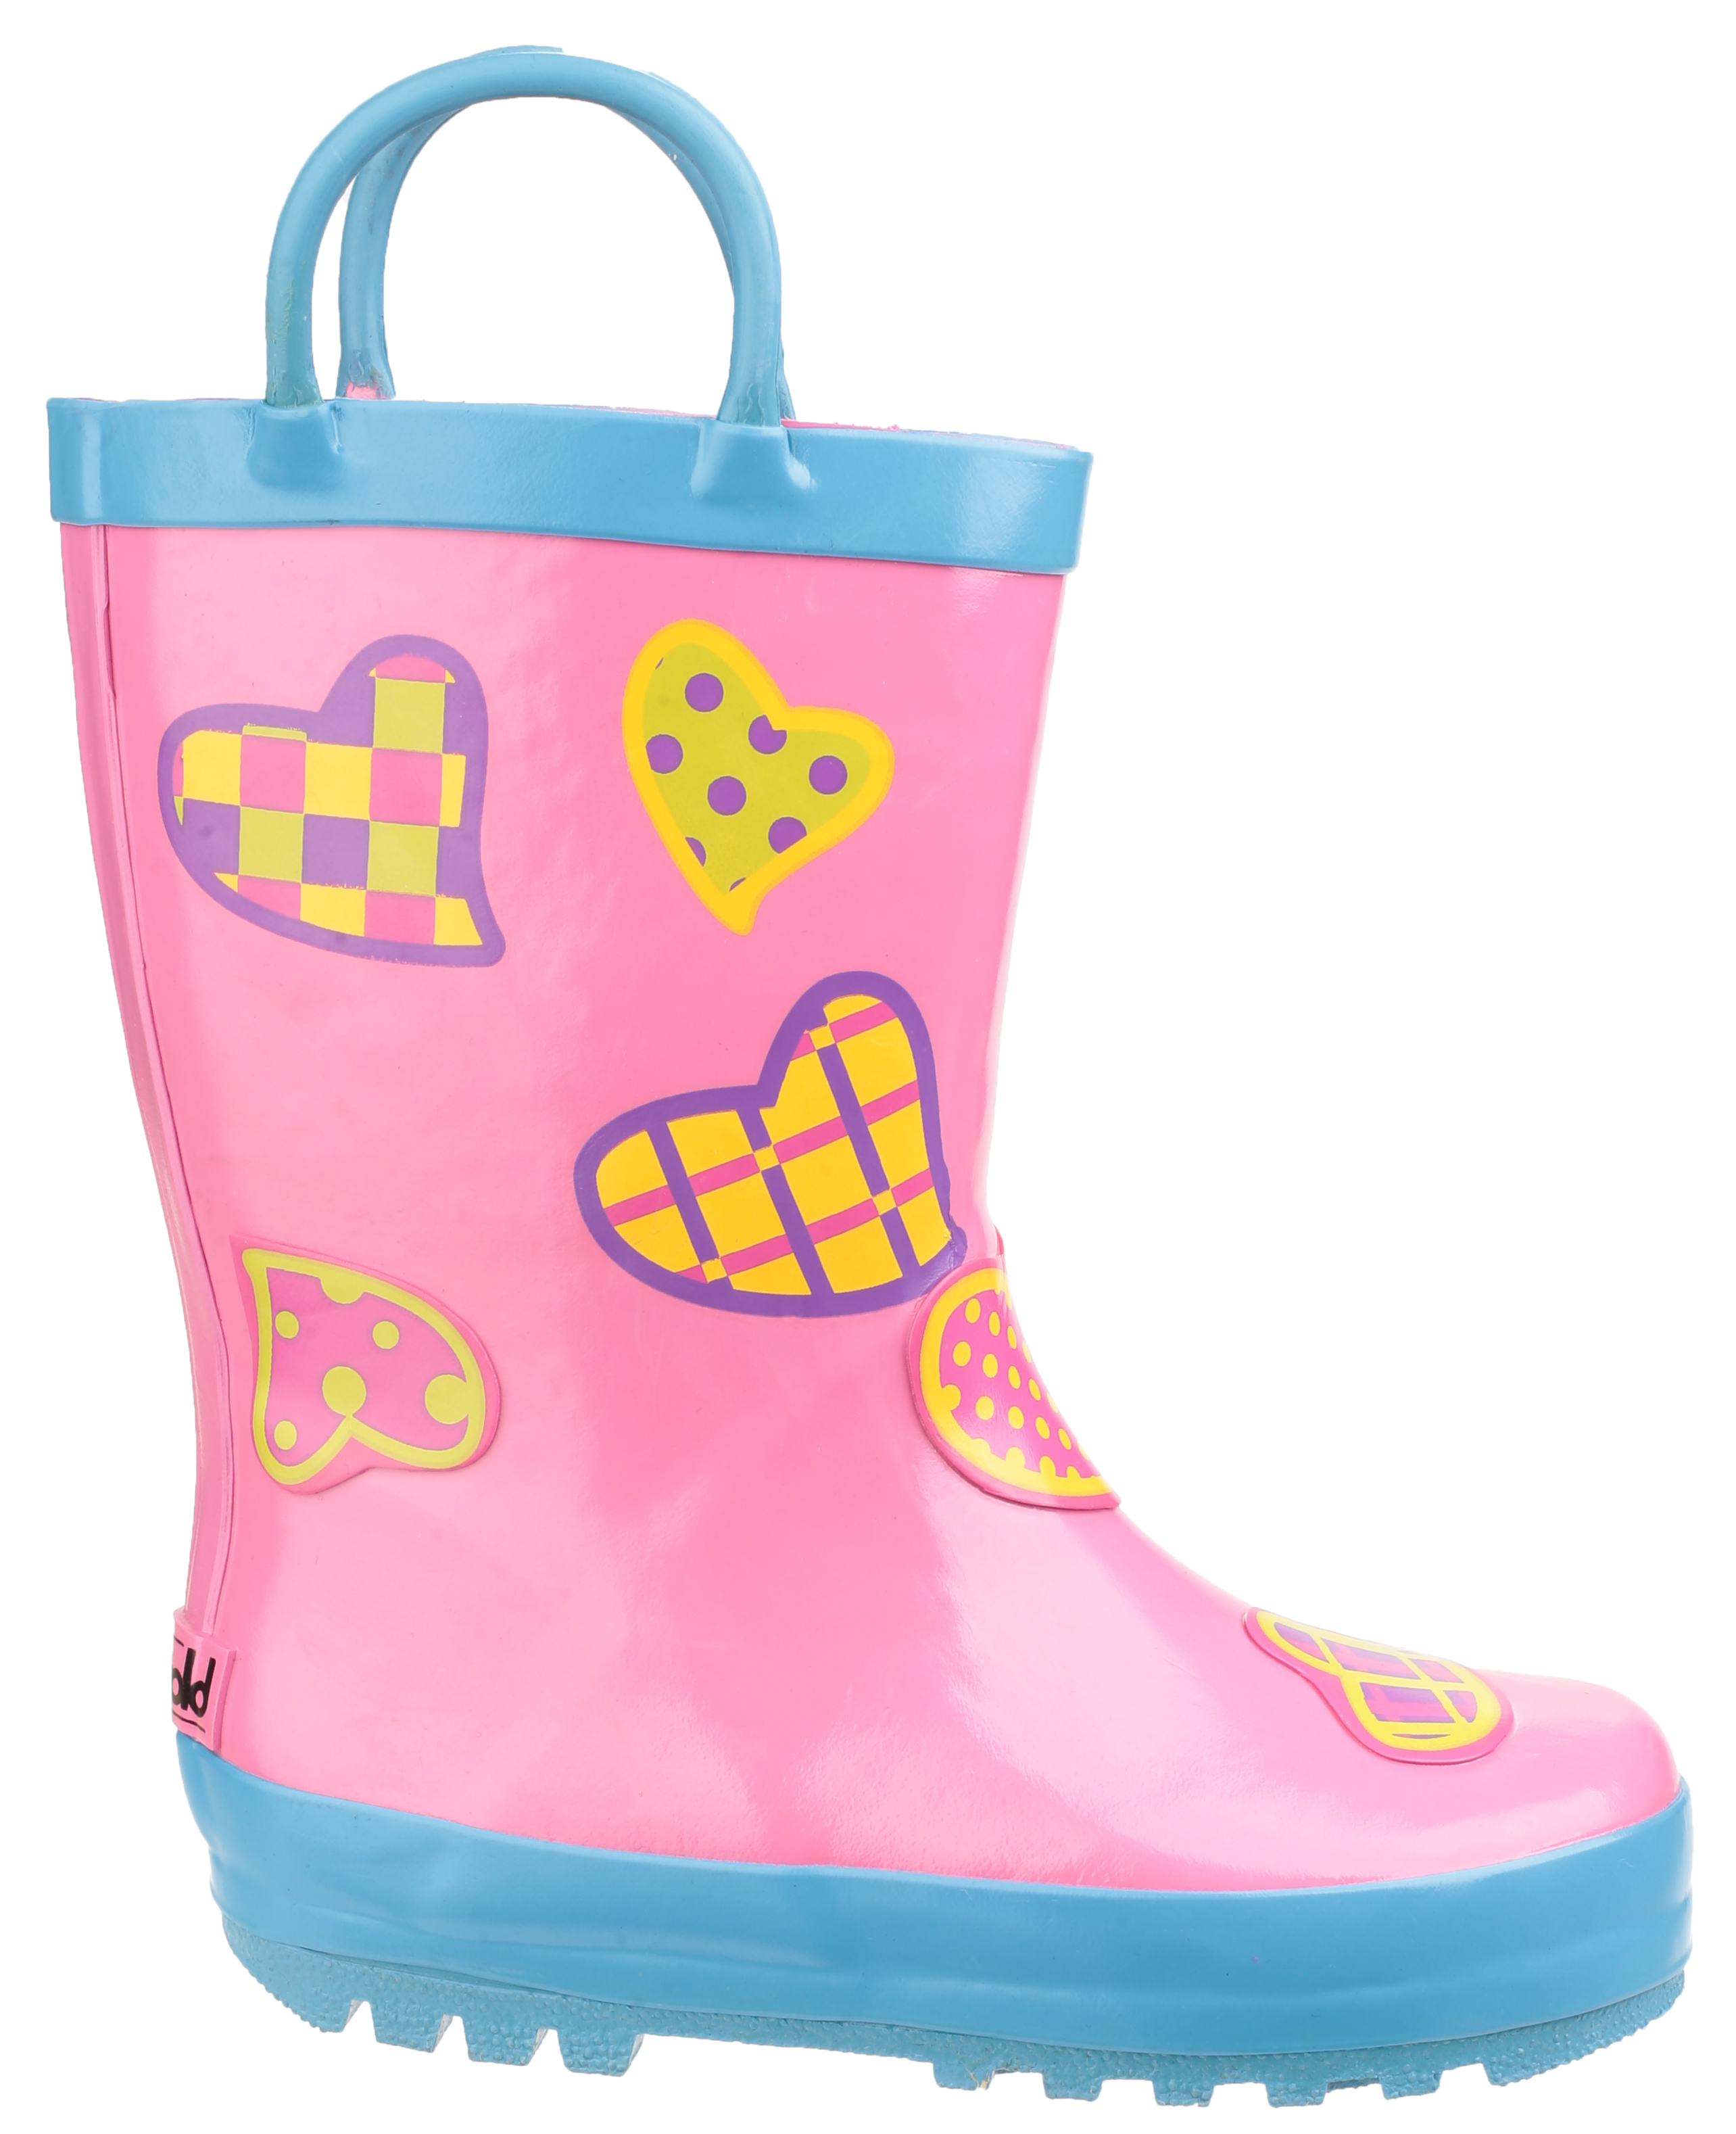 Corporate Children Hearts Wellington Boots